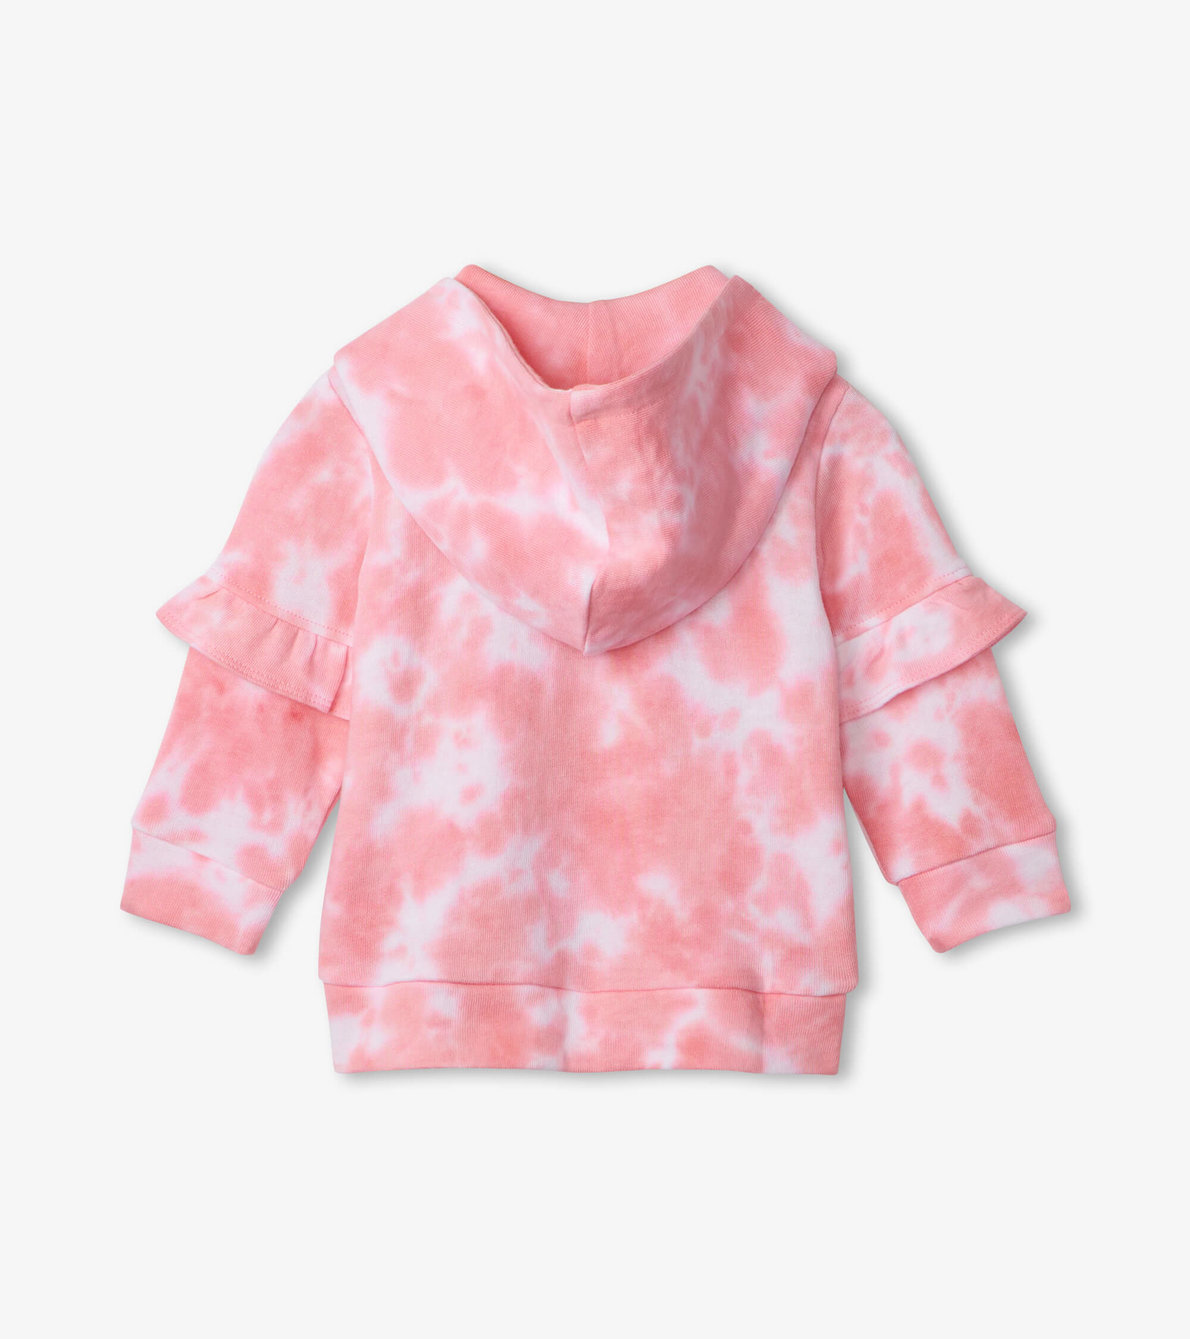 View larger image of Pink Tie Dye Baby Ruffle Sleeve Hoodie